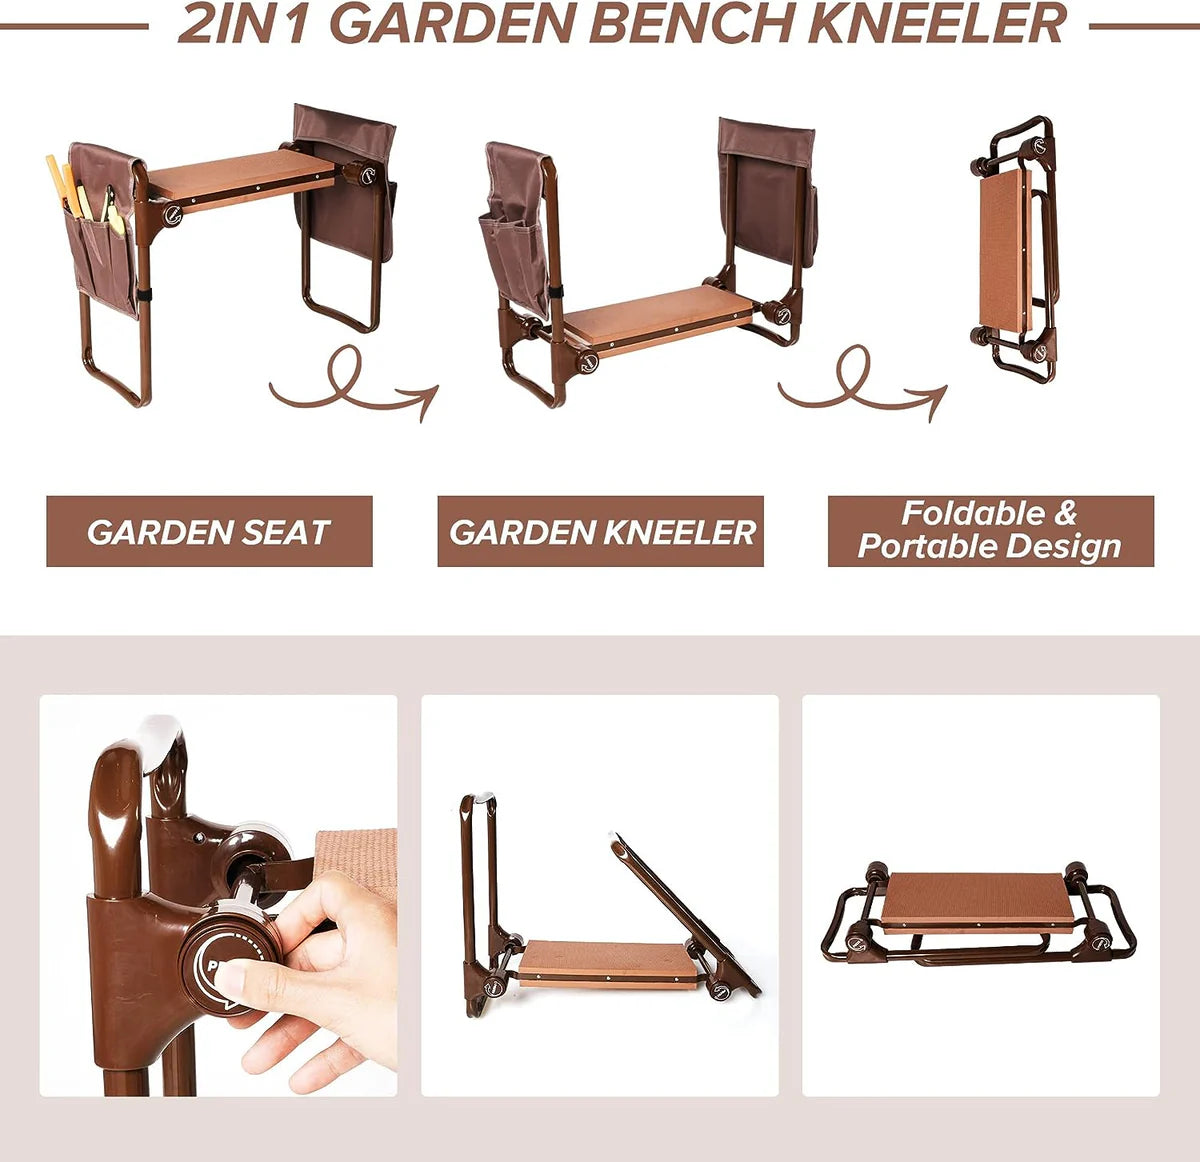 Widen Upgrade Garden Kneeler Seat Garden Stools Bench with 2 Tool Pouches, Brown